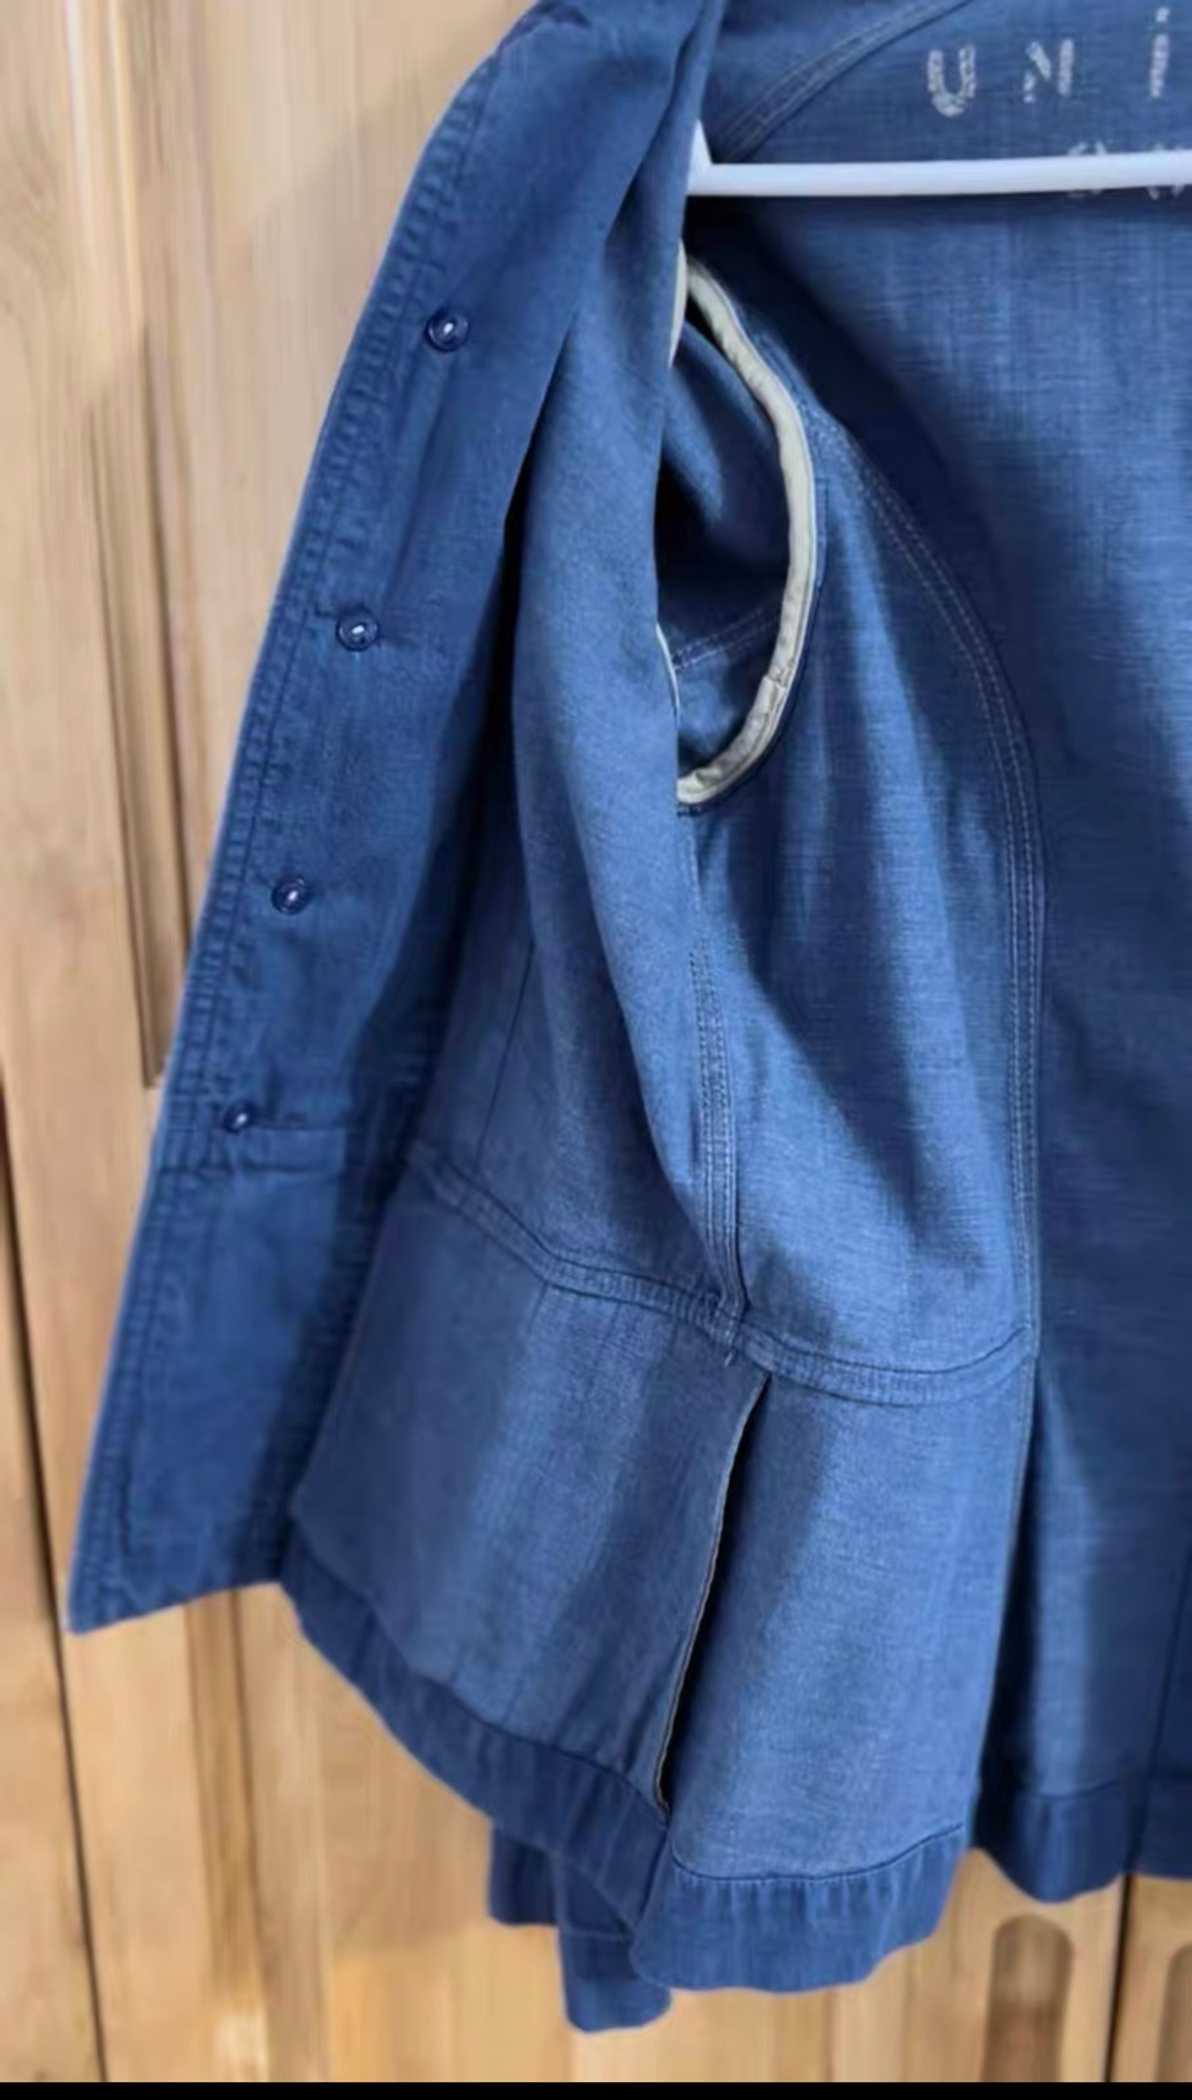 45RPM Blue Dye Coat